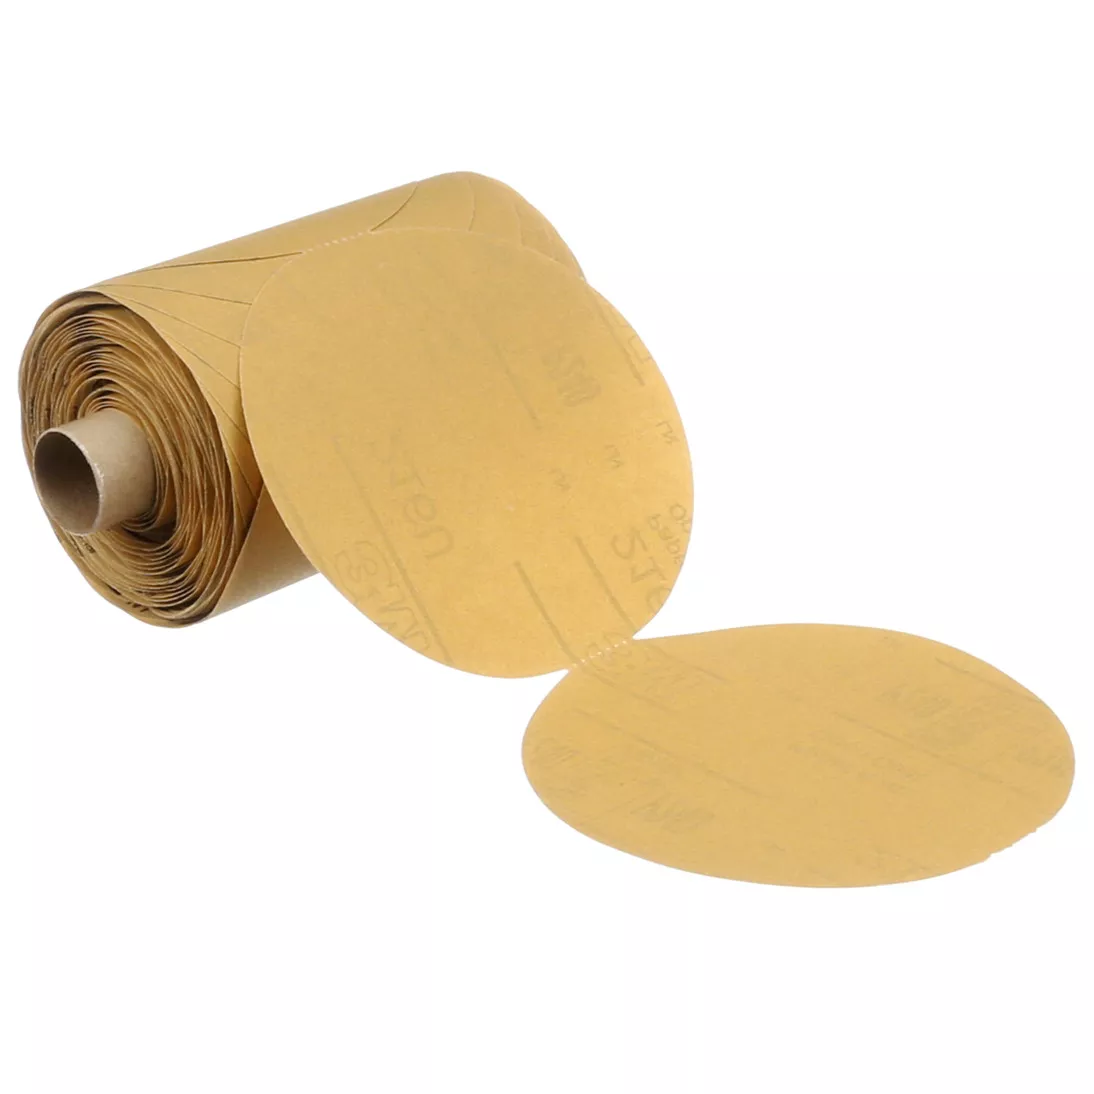 3M™ Stikit™ Gold Paper Disc Roll 216U, 5 in x NH P320 A-weight, 75
Discs/Roll, 12 Rolls/Case